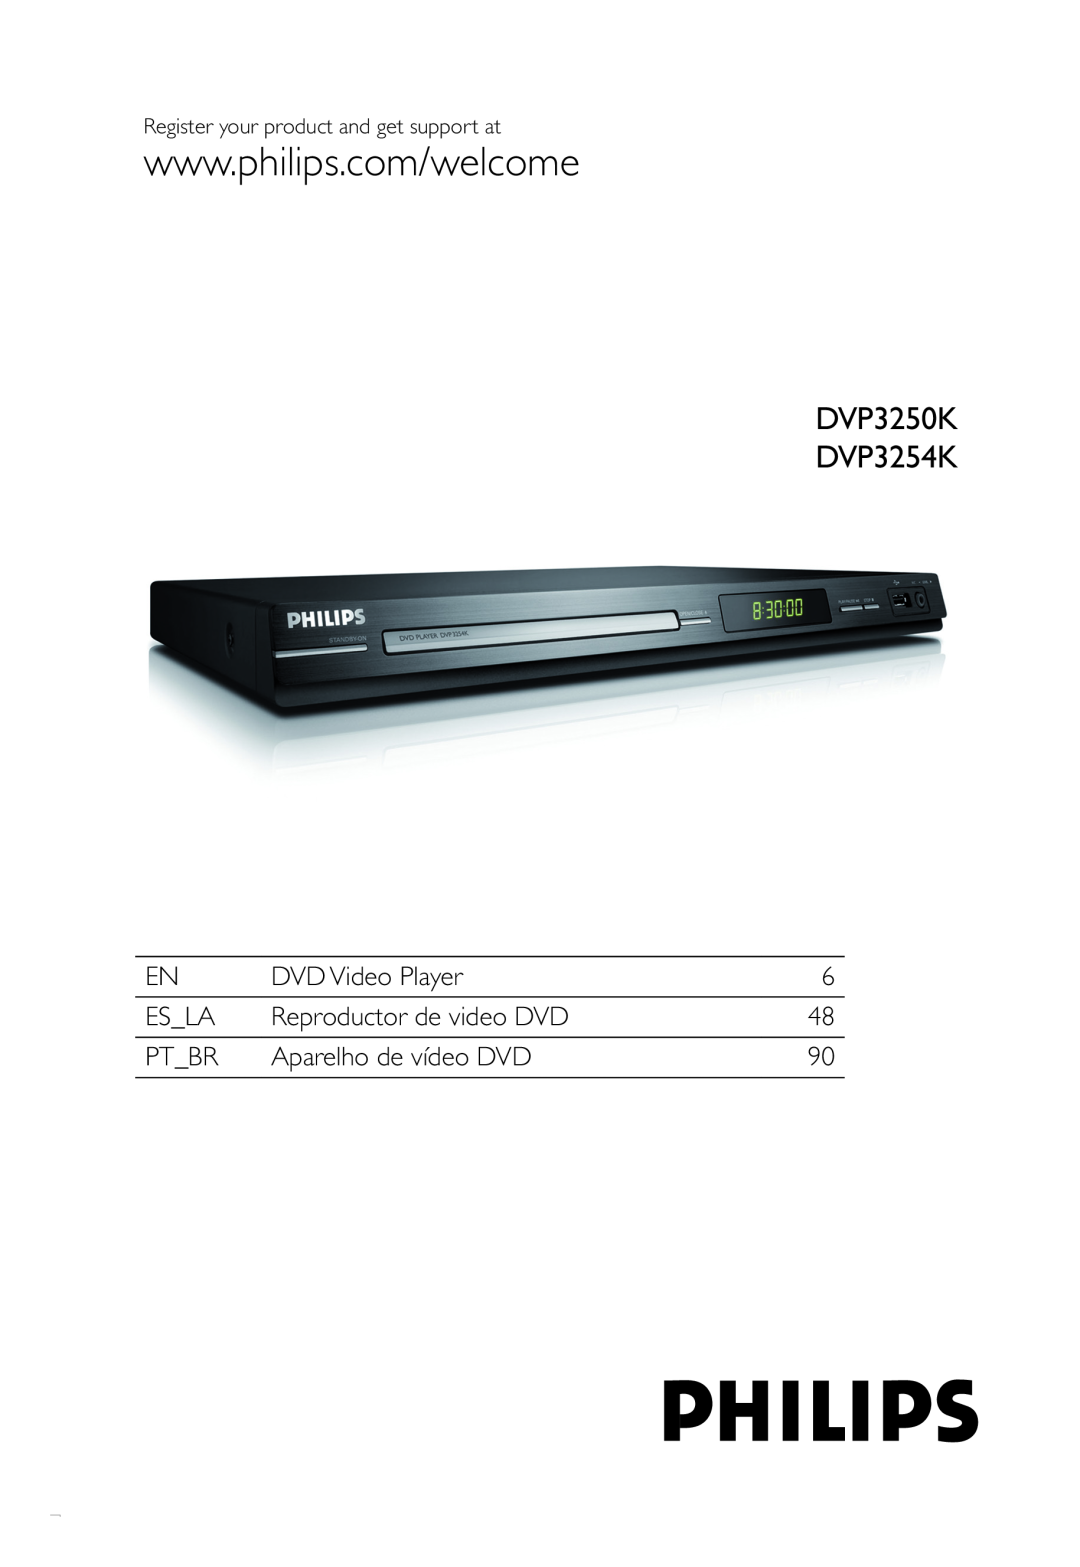 Philips manual DVP3250K DVP3254K, DVD Video Player, Esla, Reproductor de video DVD, Ptbr, Aparelho de vídeo DVD 